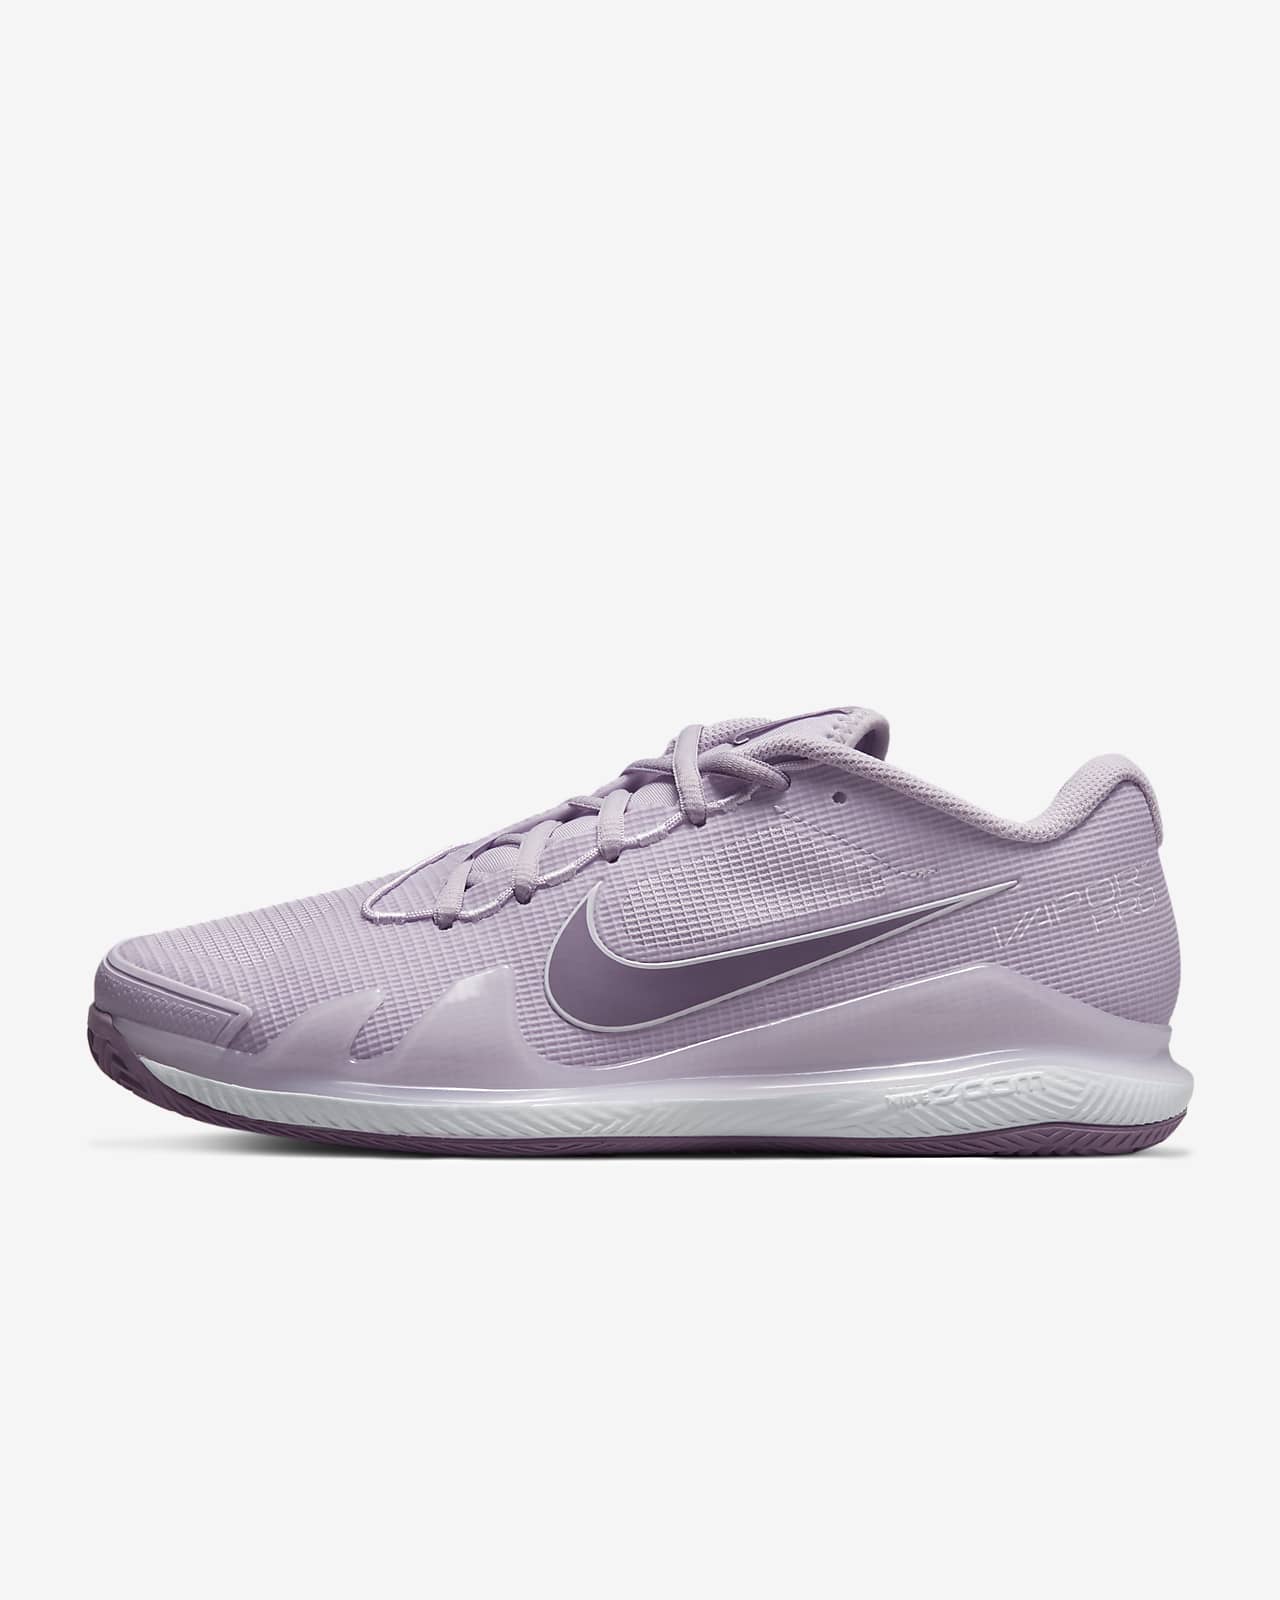 NikeCourt Air Zoom Vapor Pro Women's Clay Court Tennis Shoe